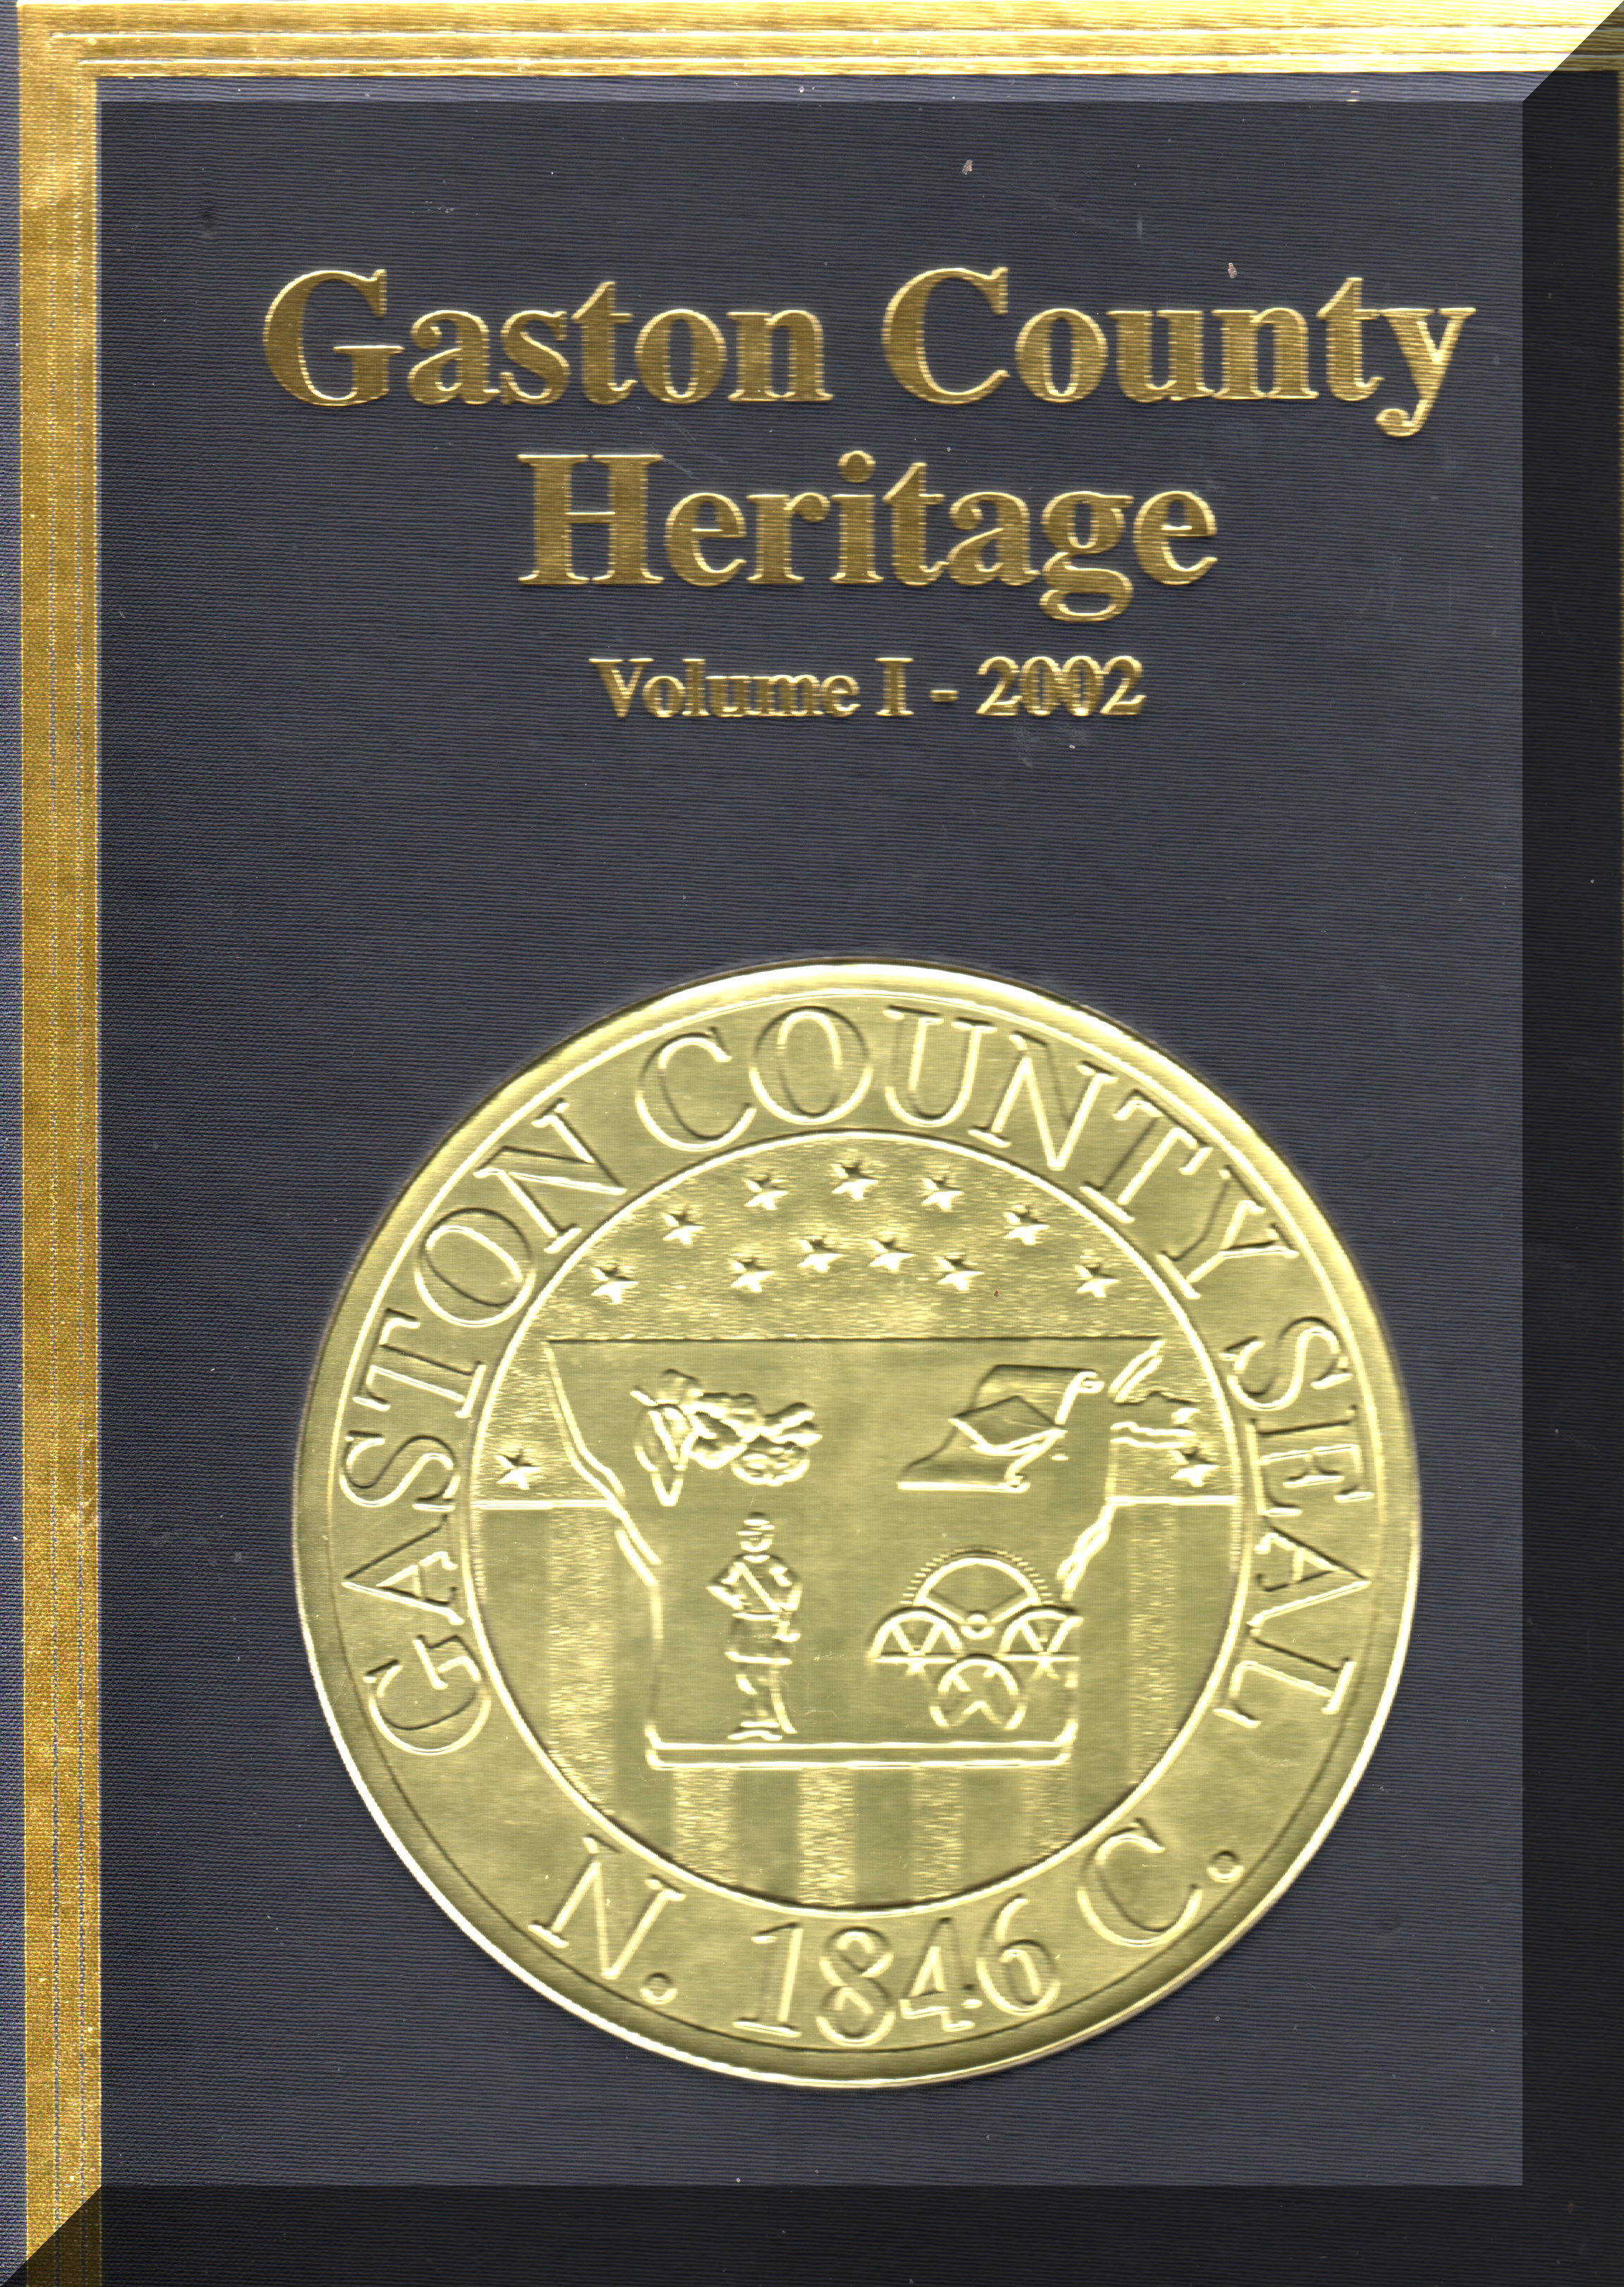 Gaston County Heritage 2002 Vol. 1